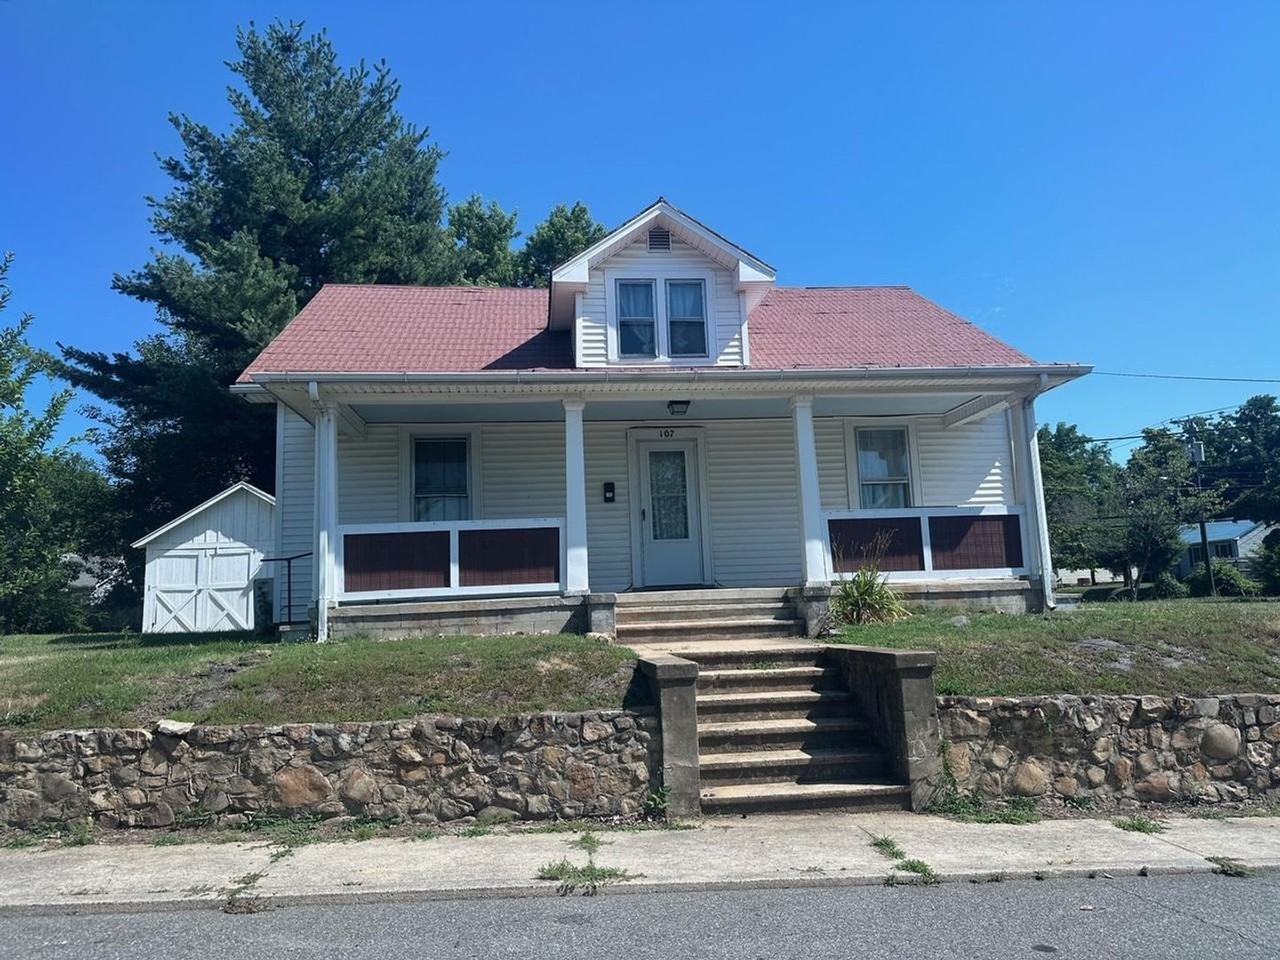 107 Preston St, Salem, VA 24153 3 Bedroom House for $2,000/month - Zumper